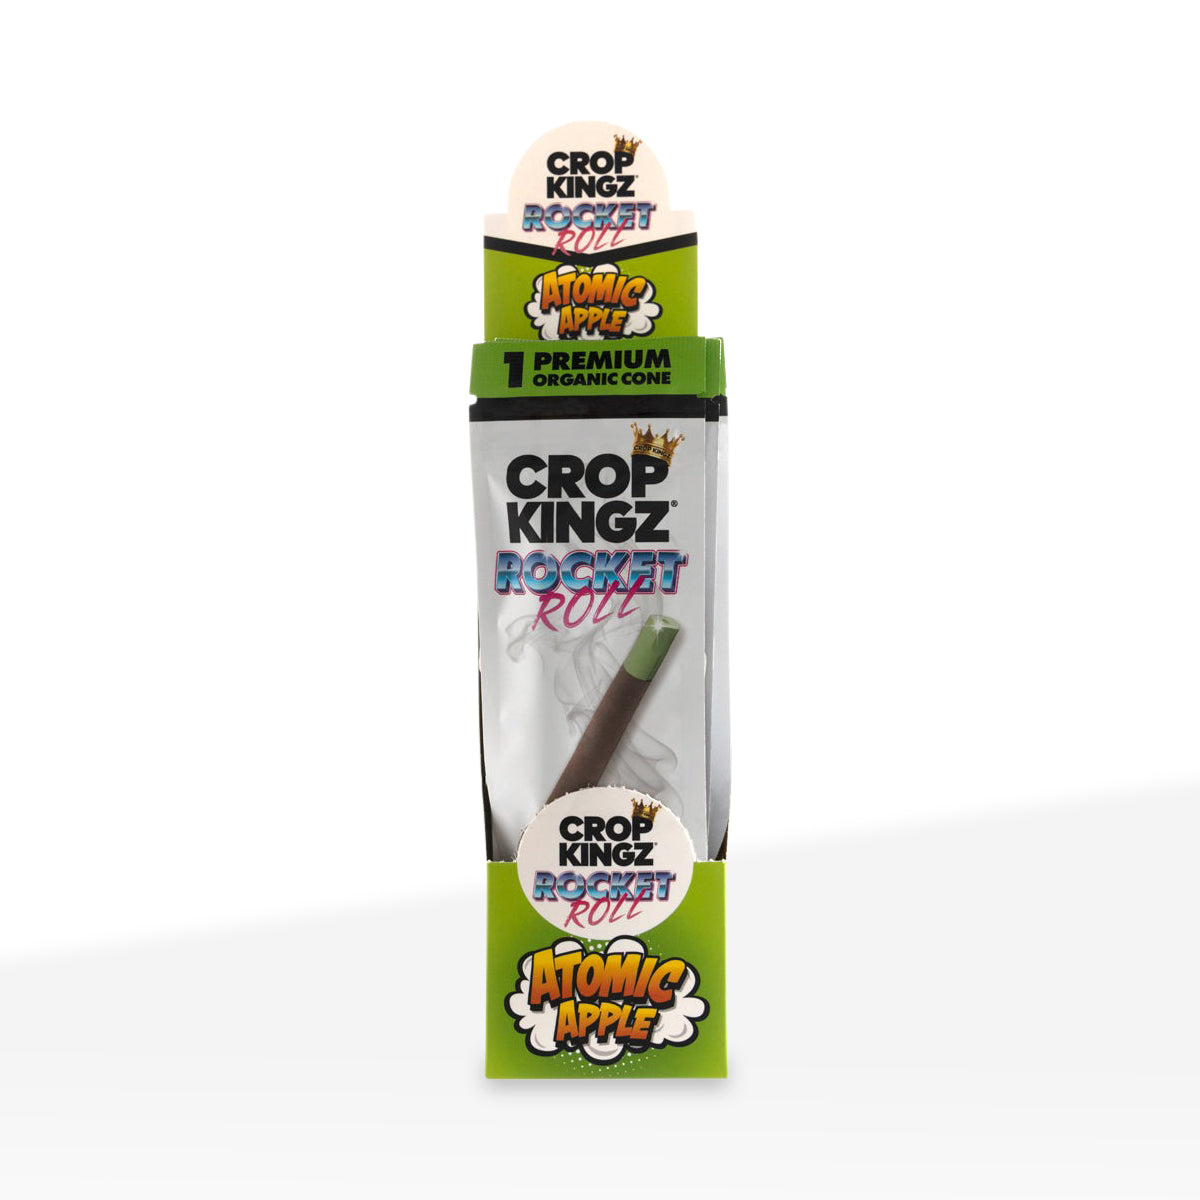 Crop Kingz | Rocket Roll Organic Hemp Wrap | Atomic Apple - 15 Count